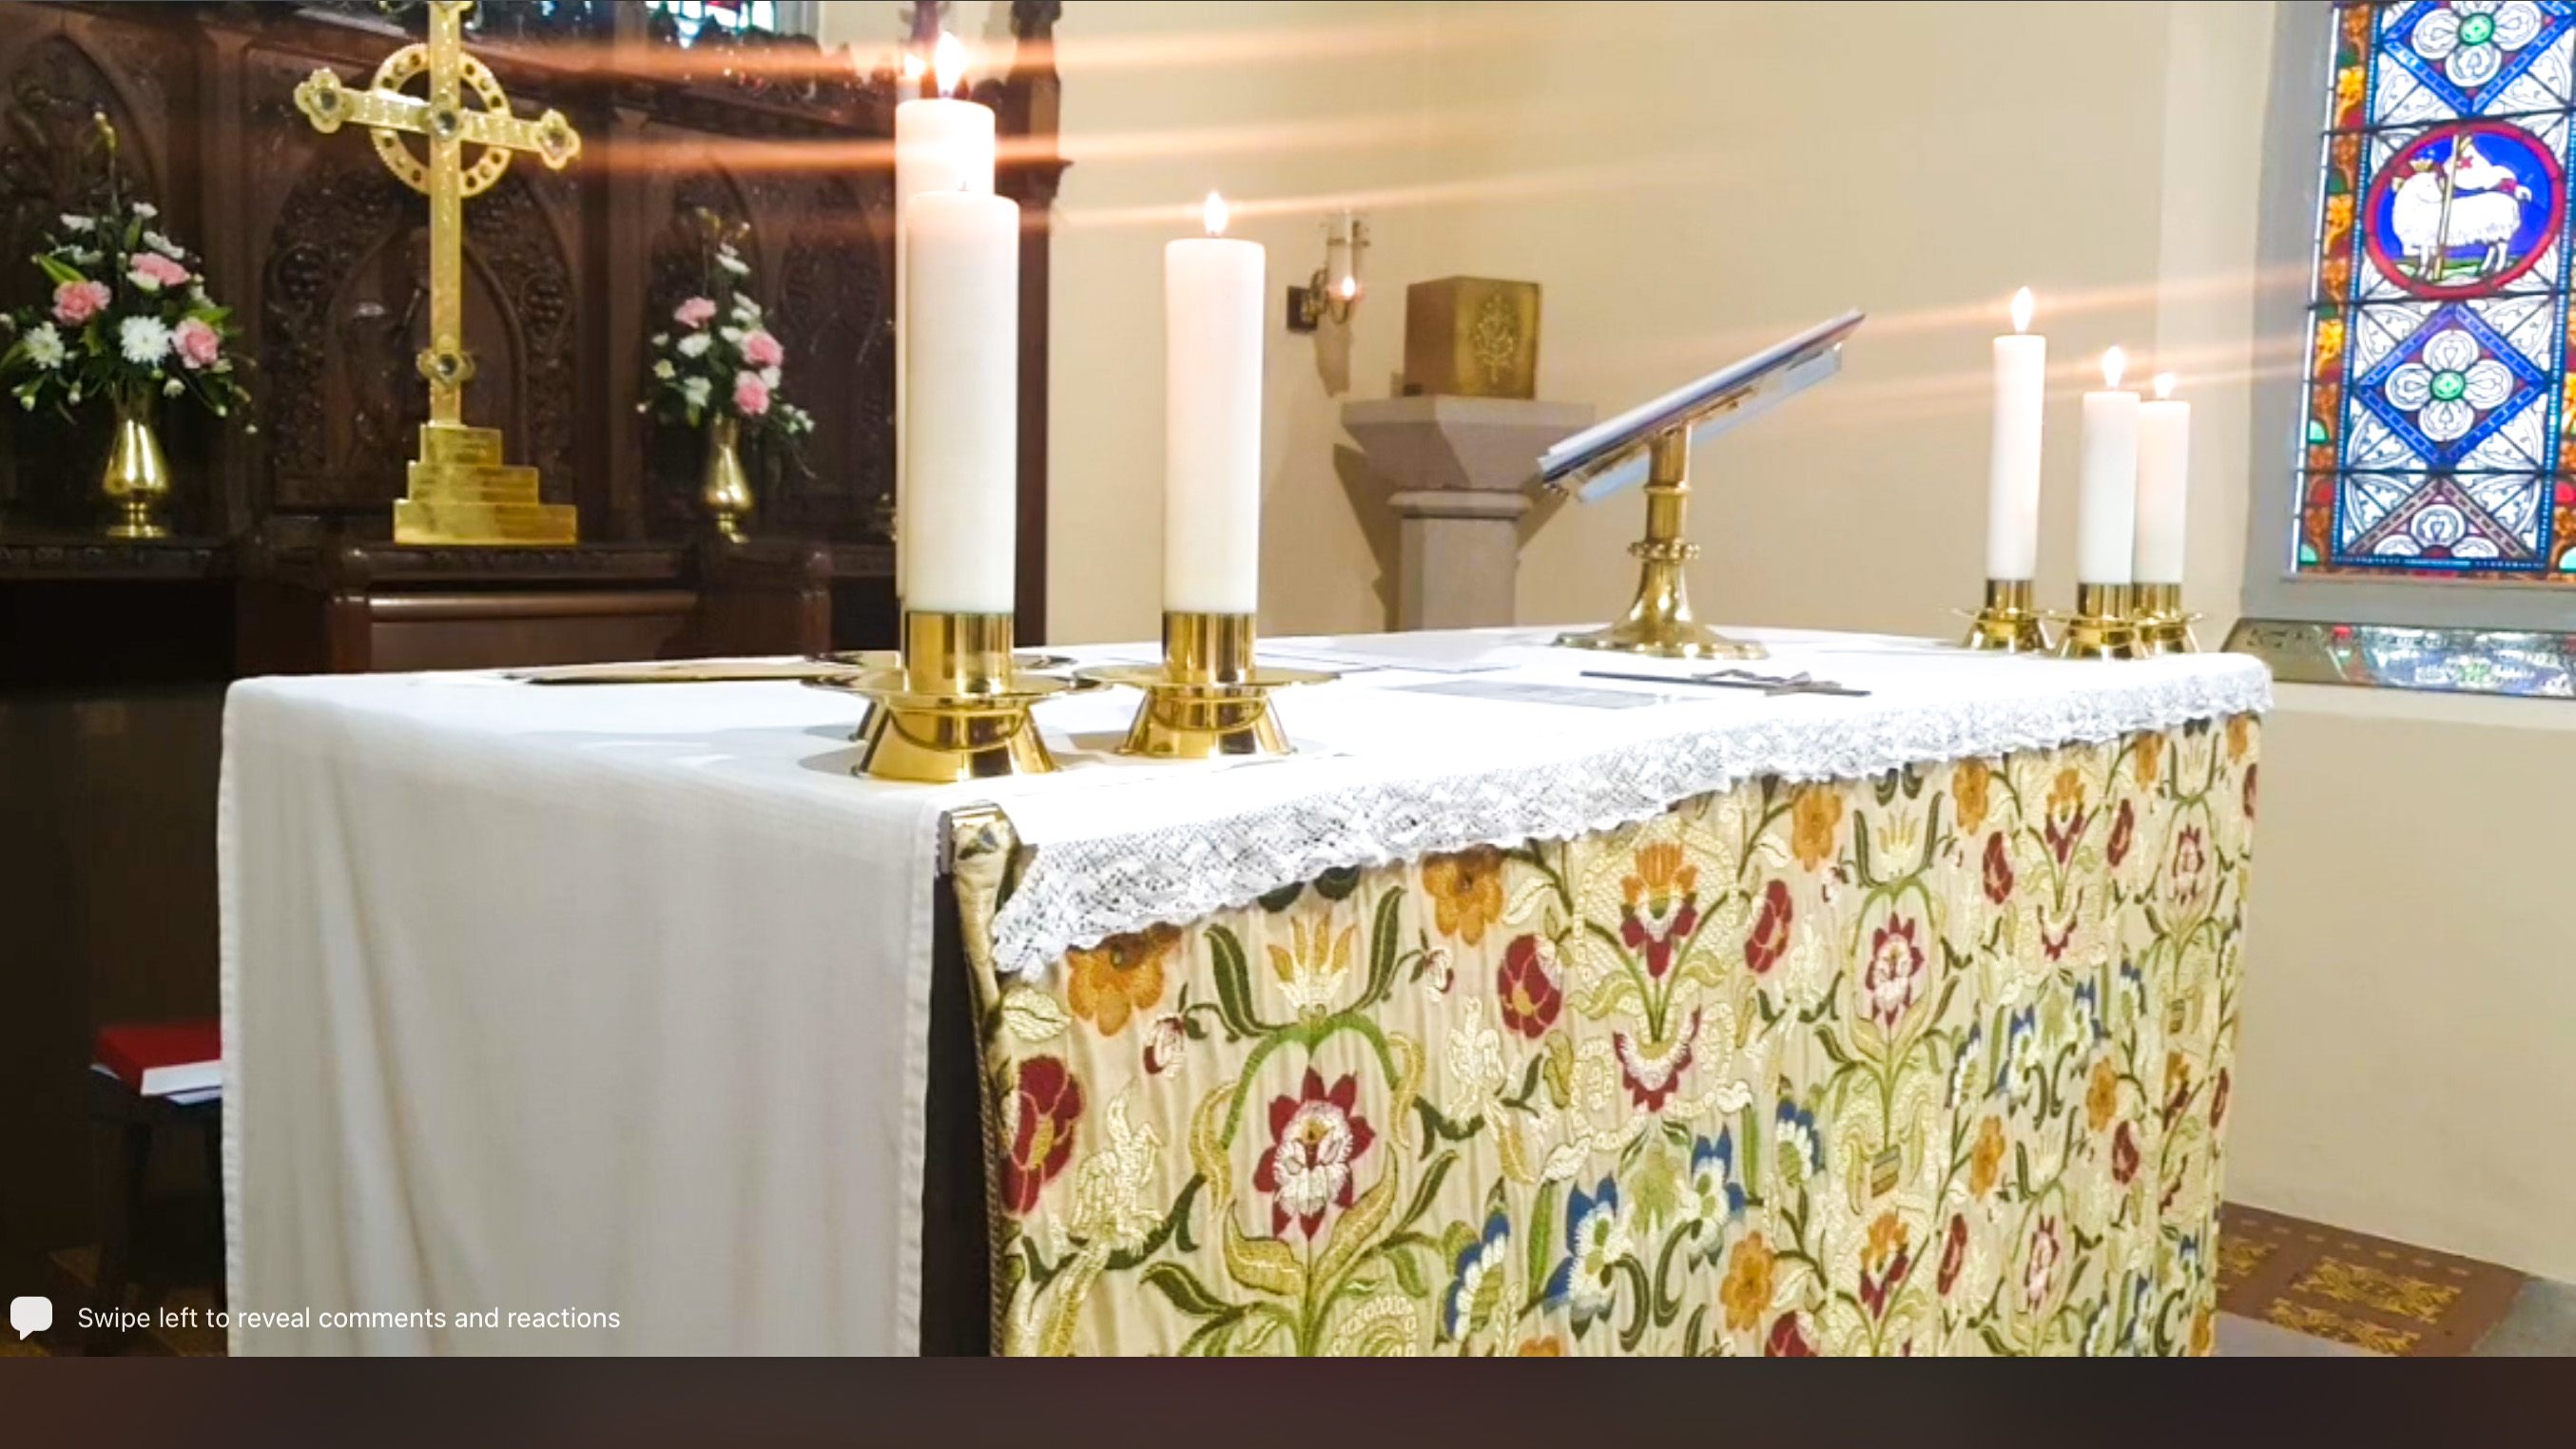 Parish Eucharist on Sunday 24th October 2021